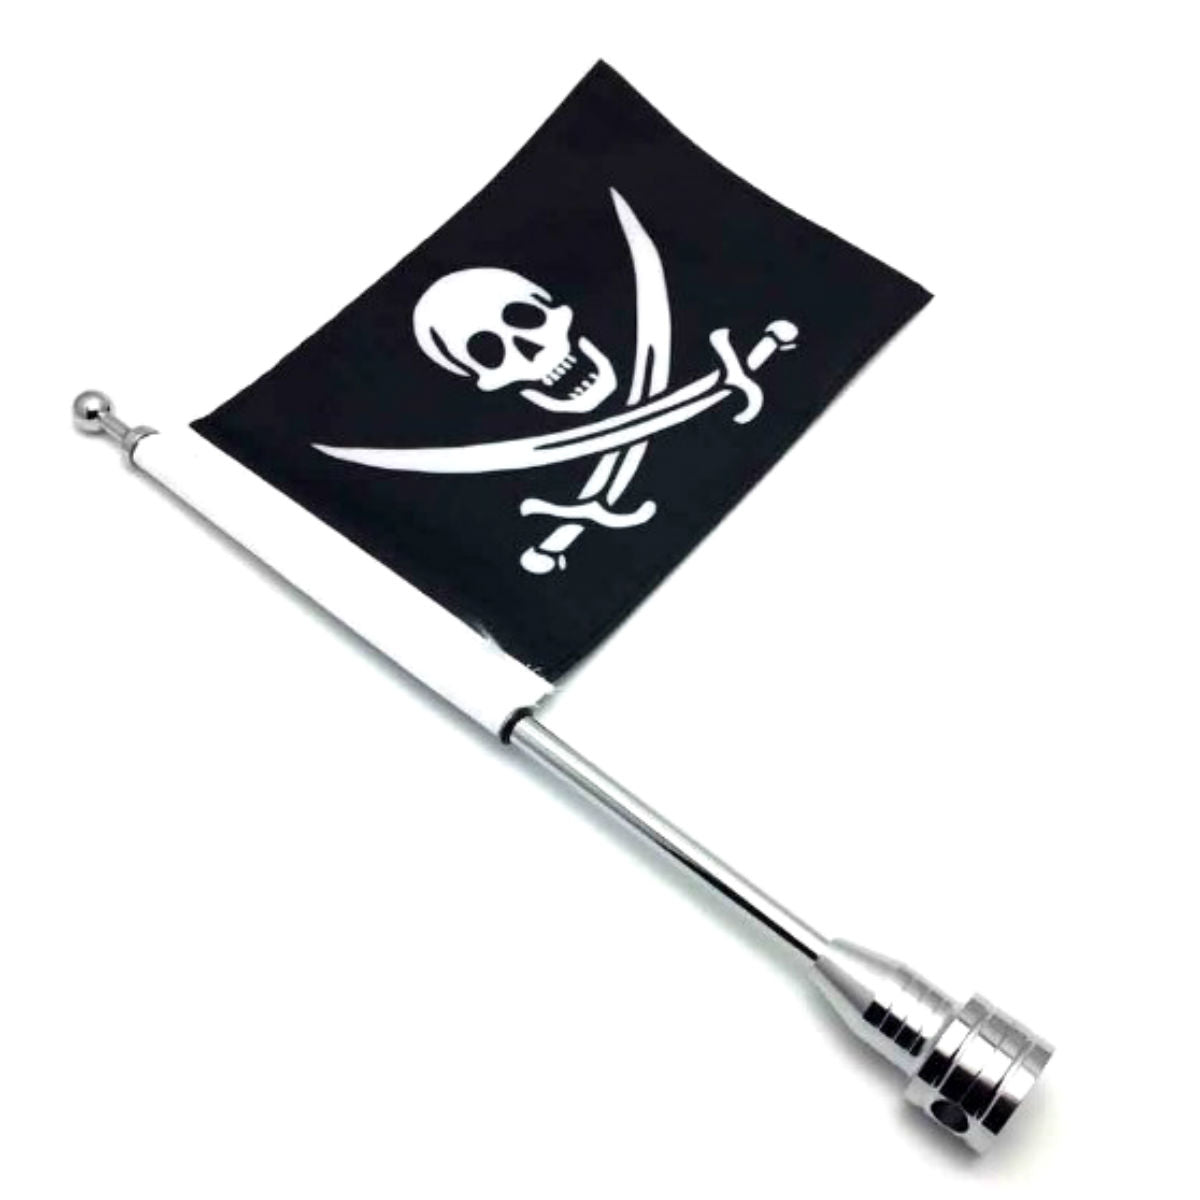 Skull & Swords Pirate Motorcycle Pole Mount 15.3" & Flag 10.6" x 6.7", Black/White